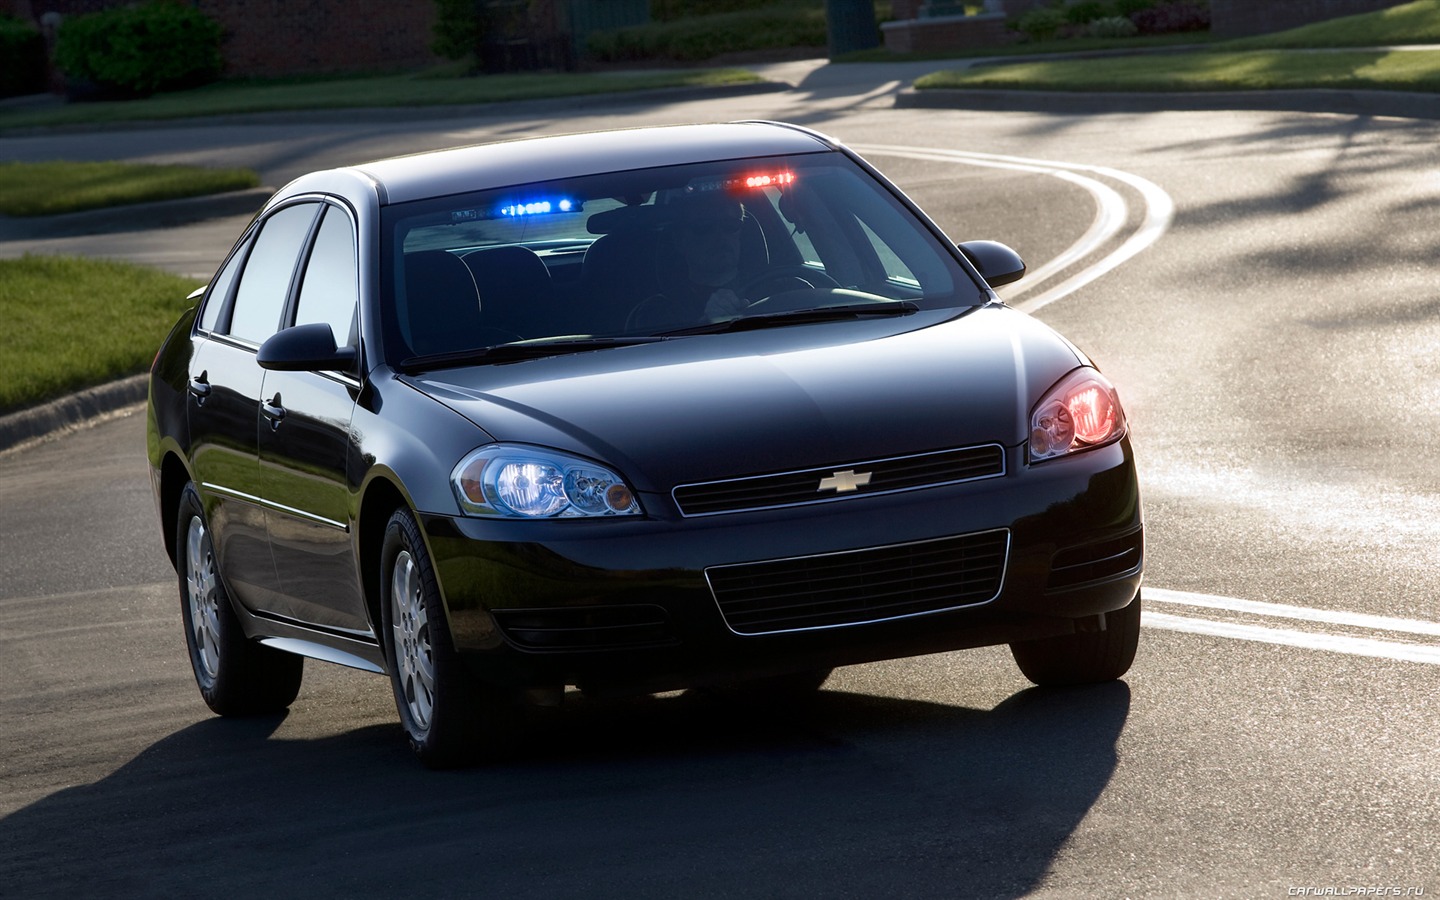 Chevrolet Impala Police Vehicle - 2011 雪佛兰6 - 1440x900